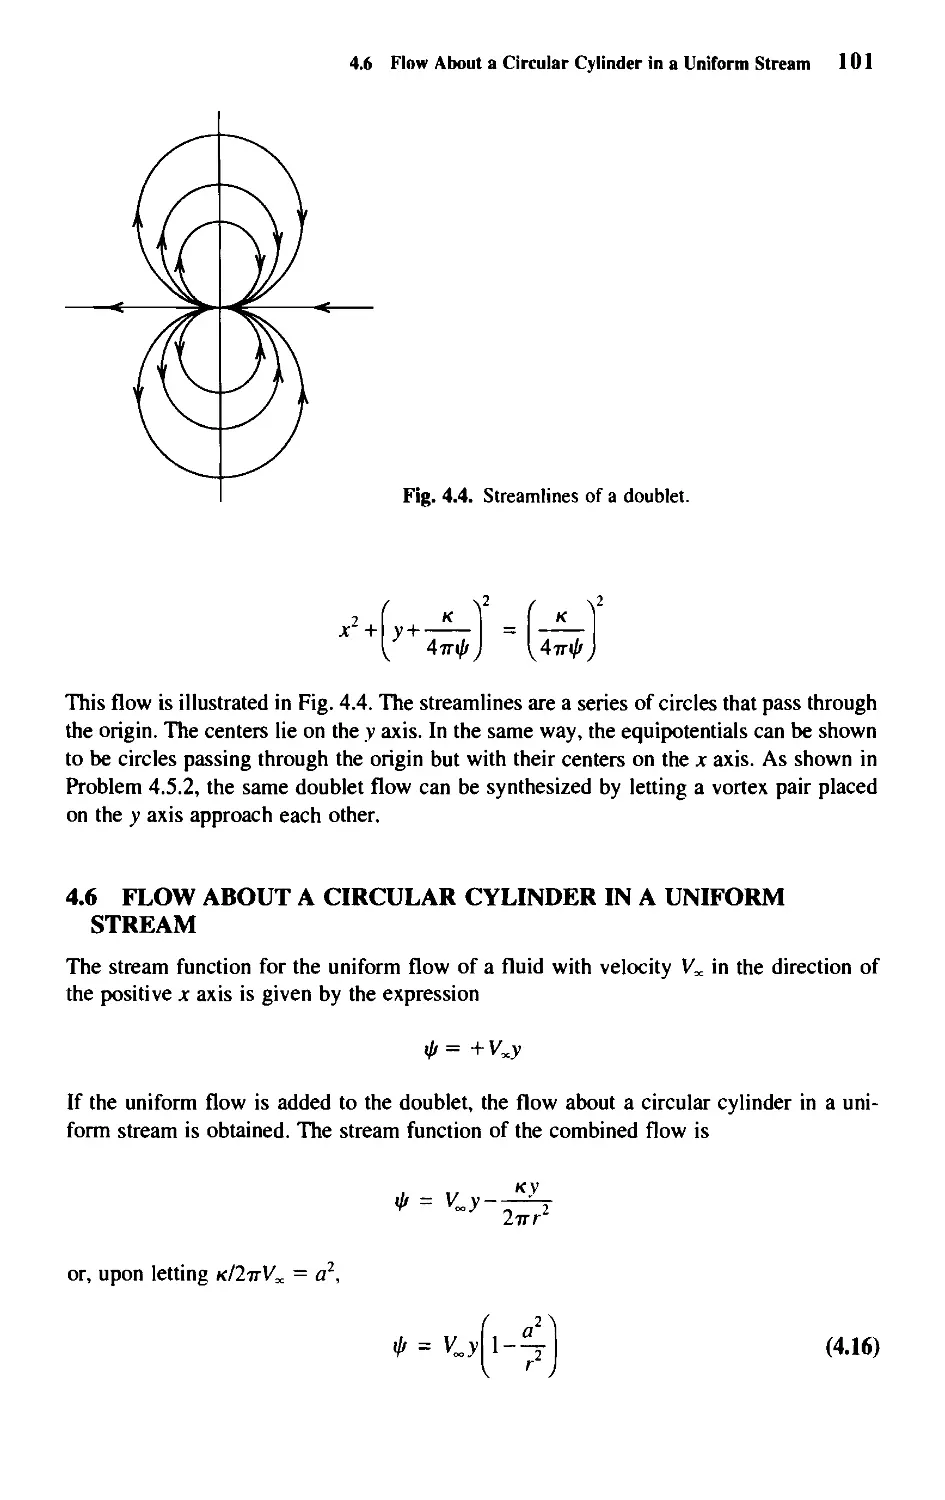 4.6 - Flow About a Circular Cylinder in a Uniform Stream